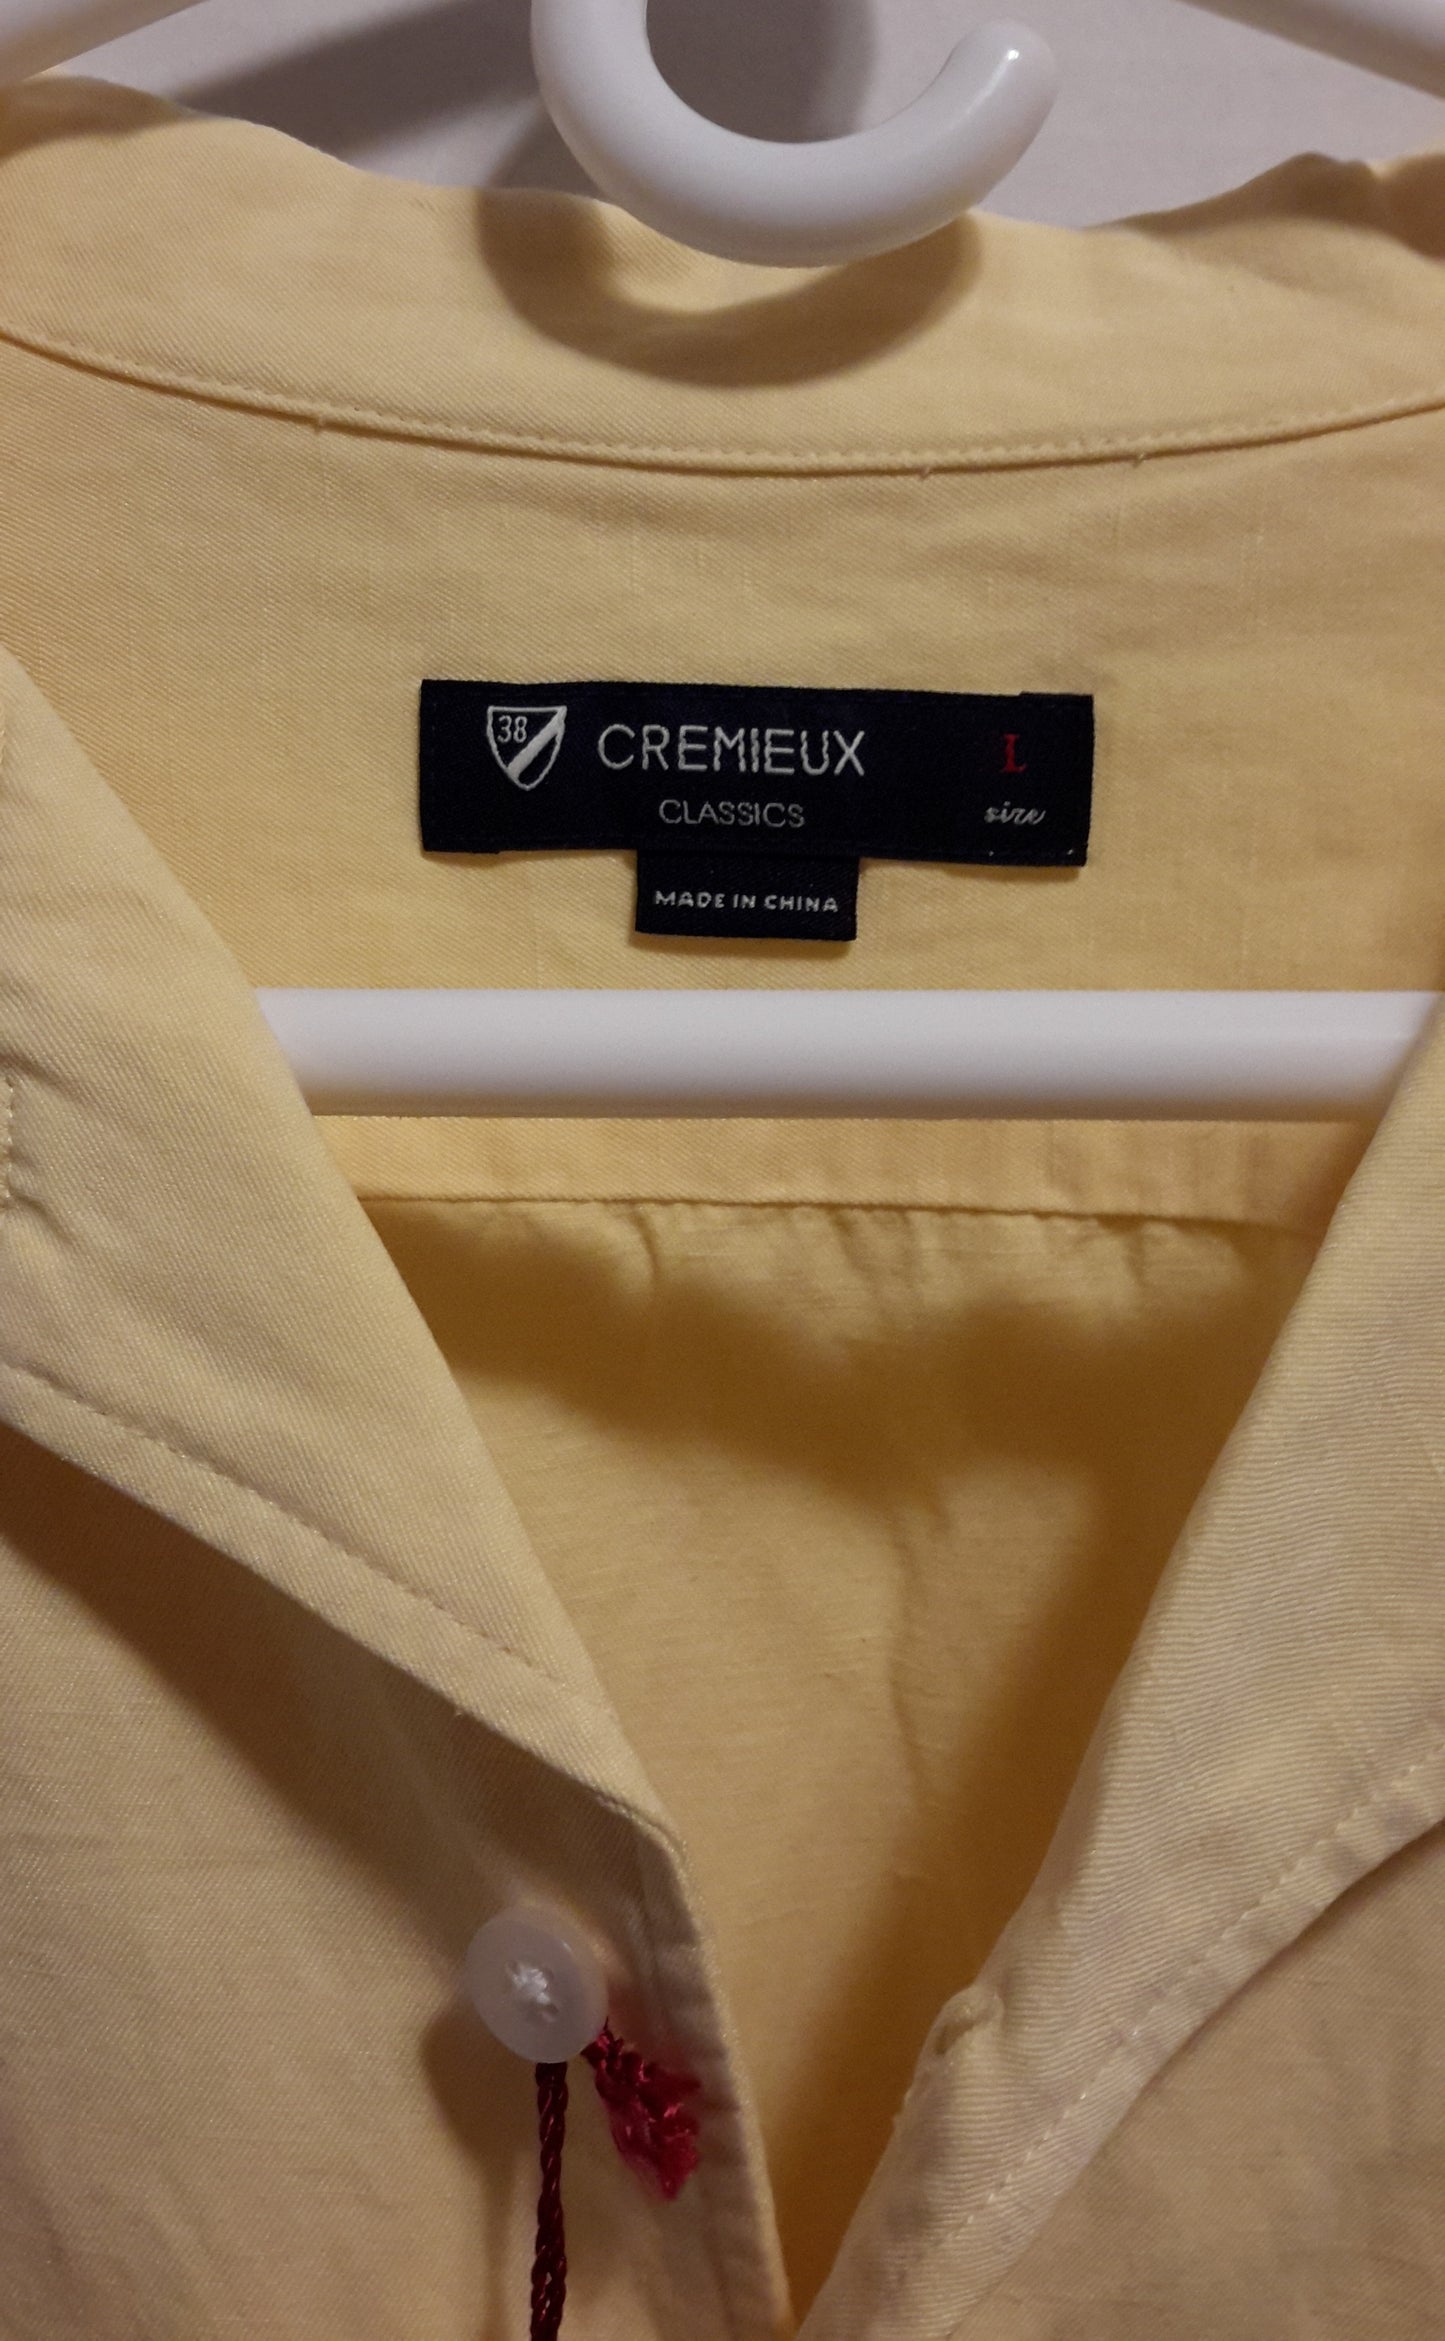 Daniel Cremieux Men's Large Short Sleeve Button Down Shirt Yellow